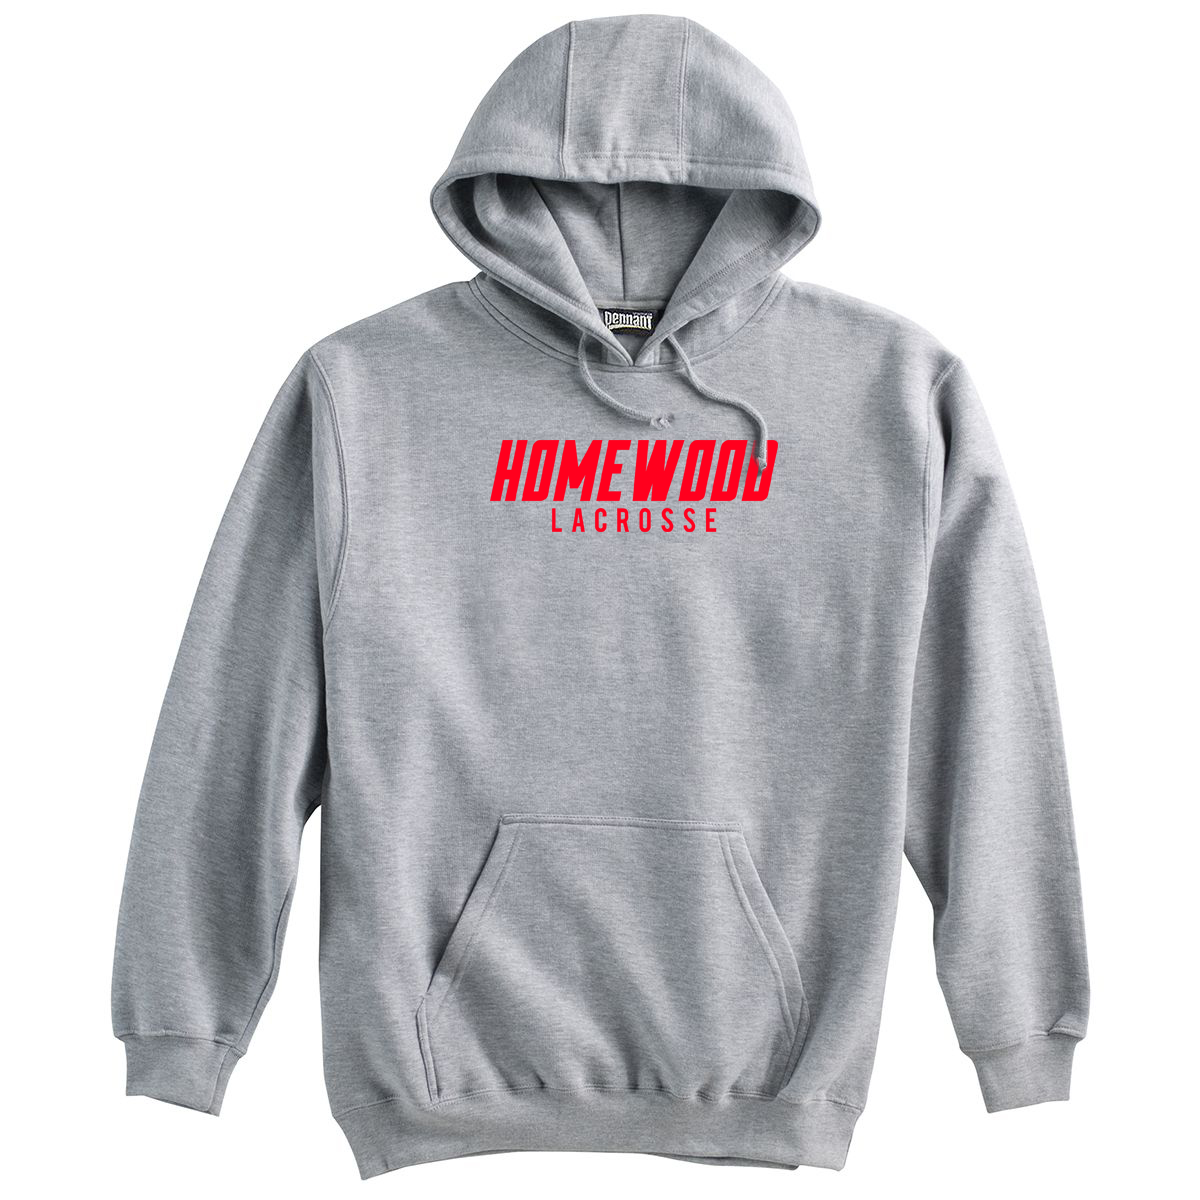 Homewood Lacrosse Sweatshirt